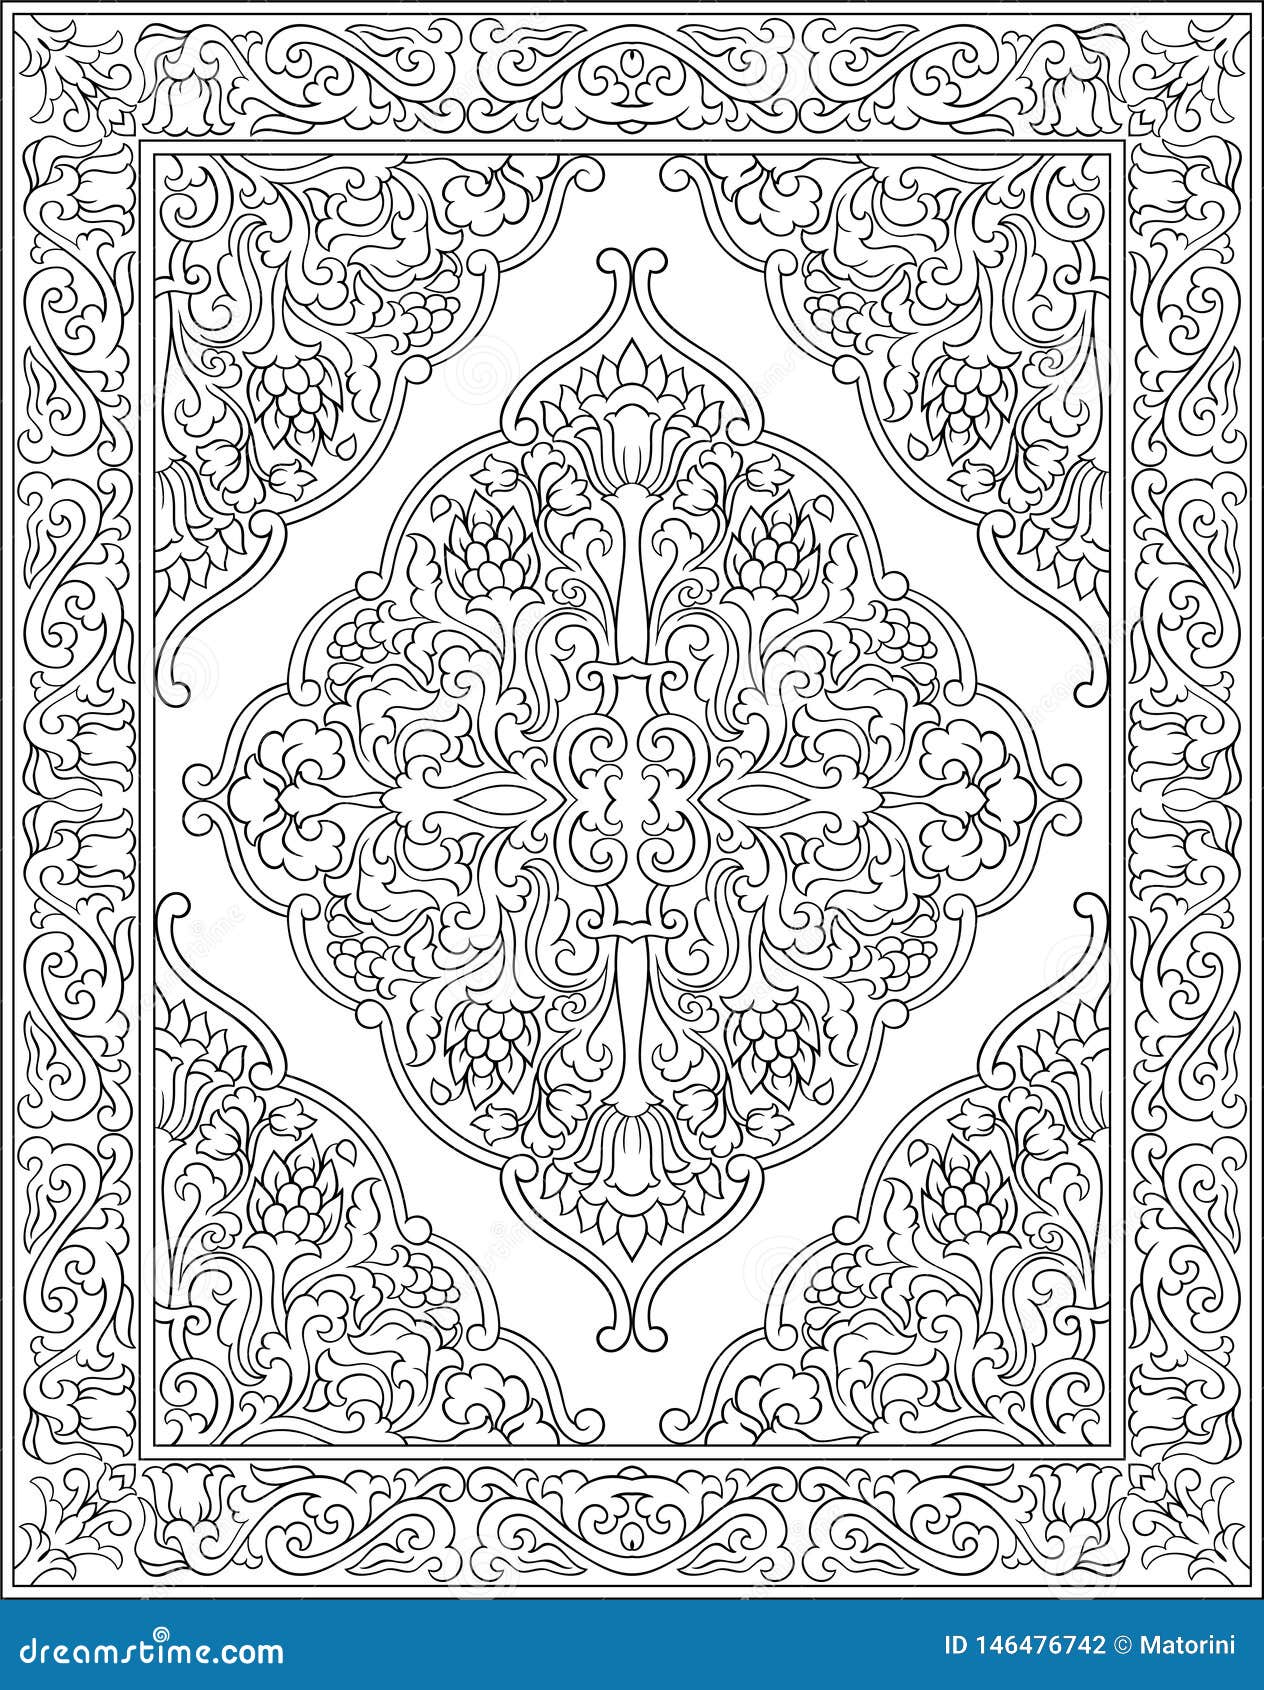 Black and white carpet stock vector. Illustration of mosaic - 146476742